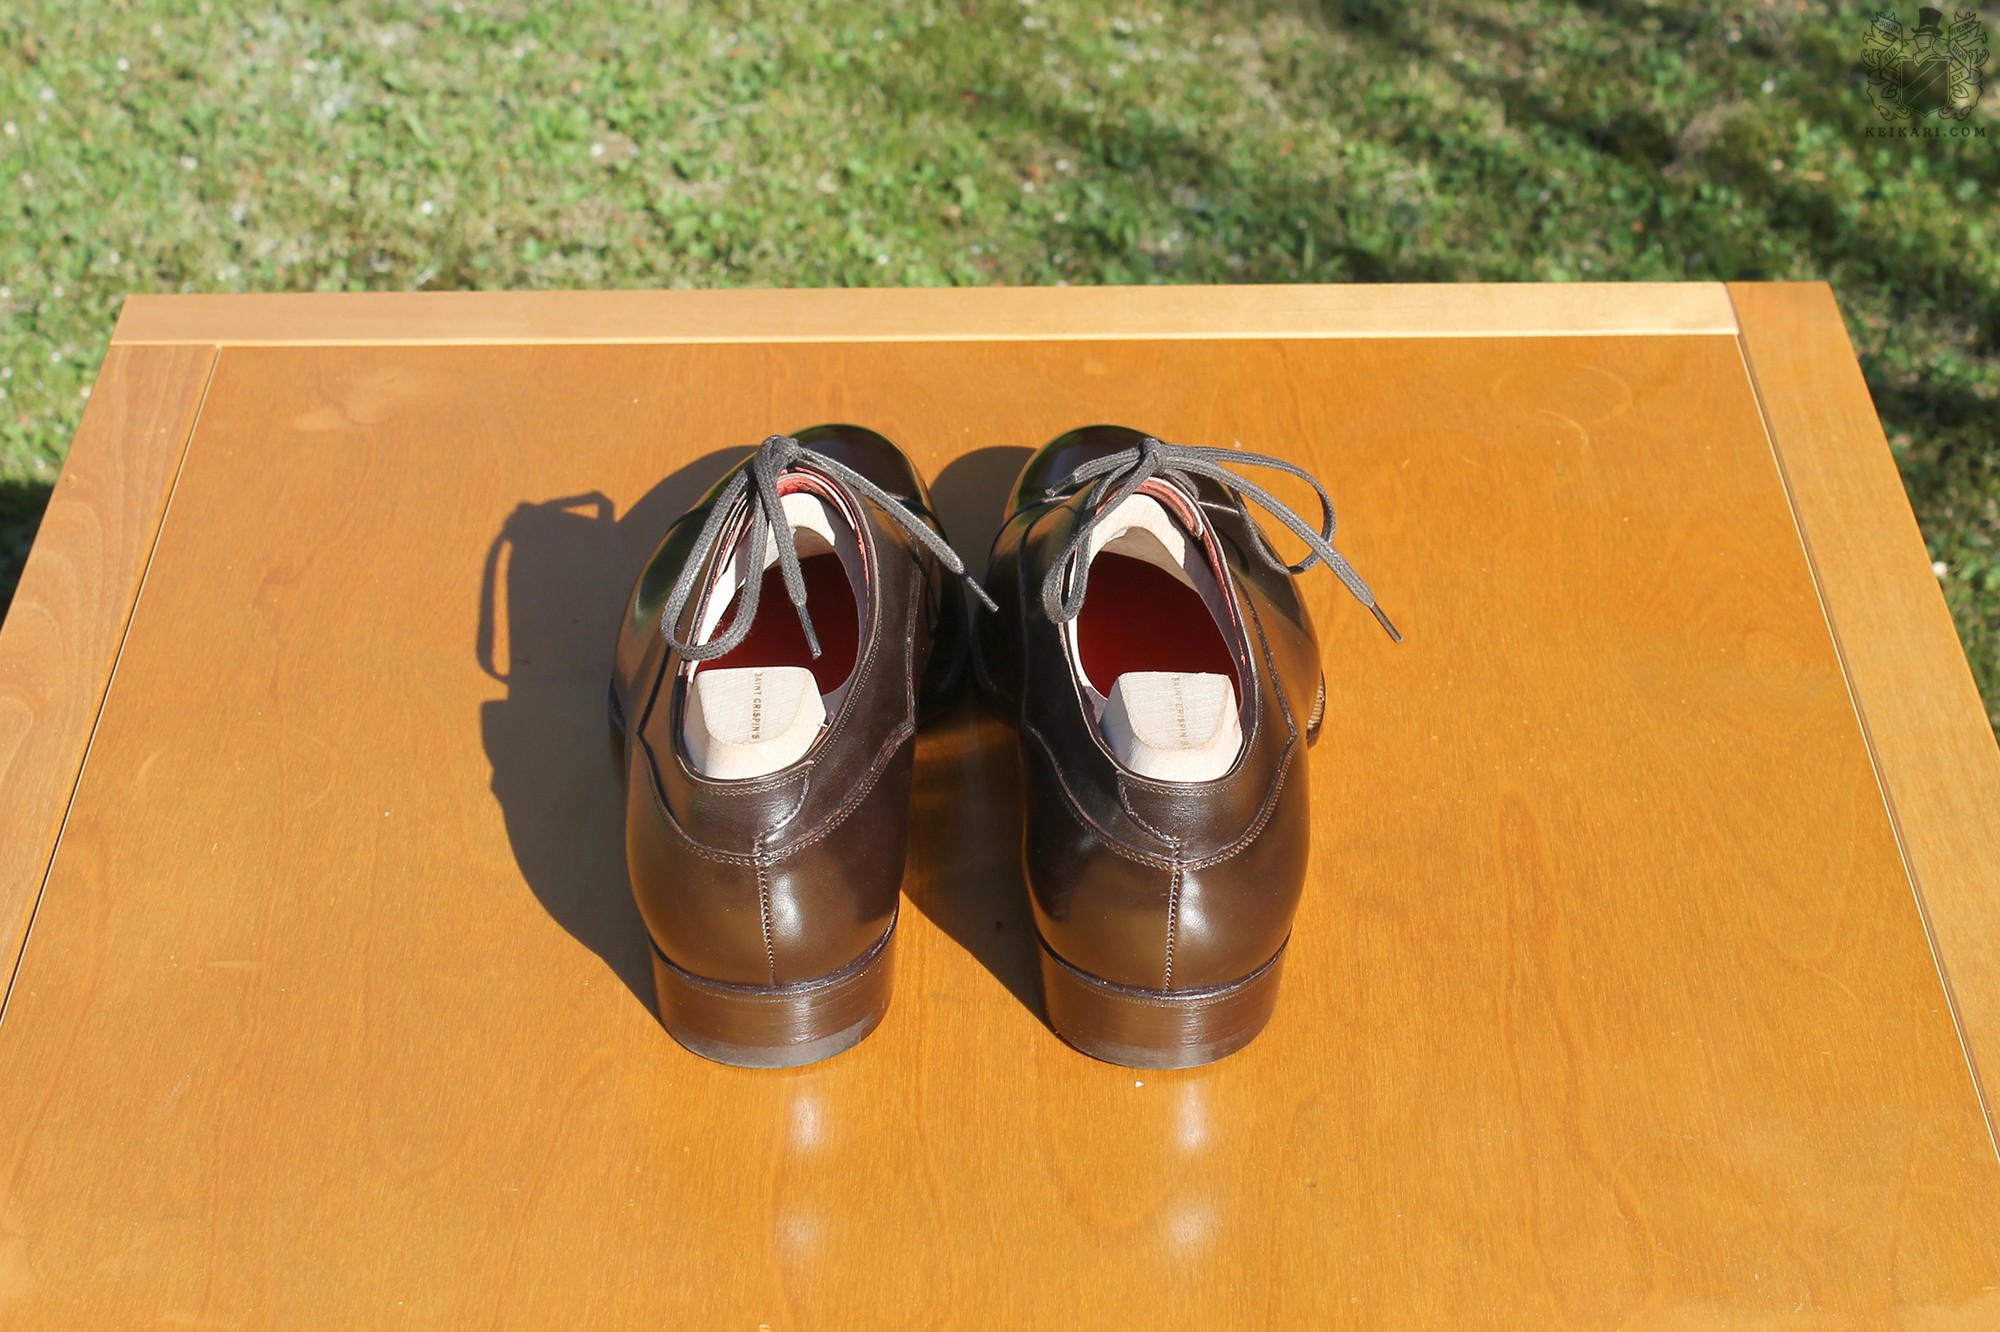 Anatomy_of_Saint_Crispins_shoes_at_Keikari_dot_com04.jpg